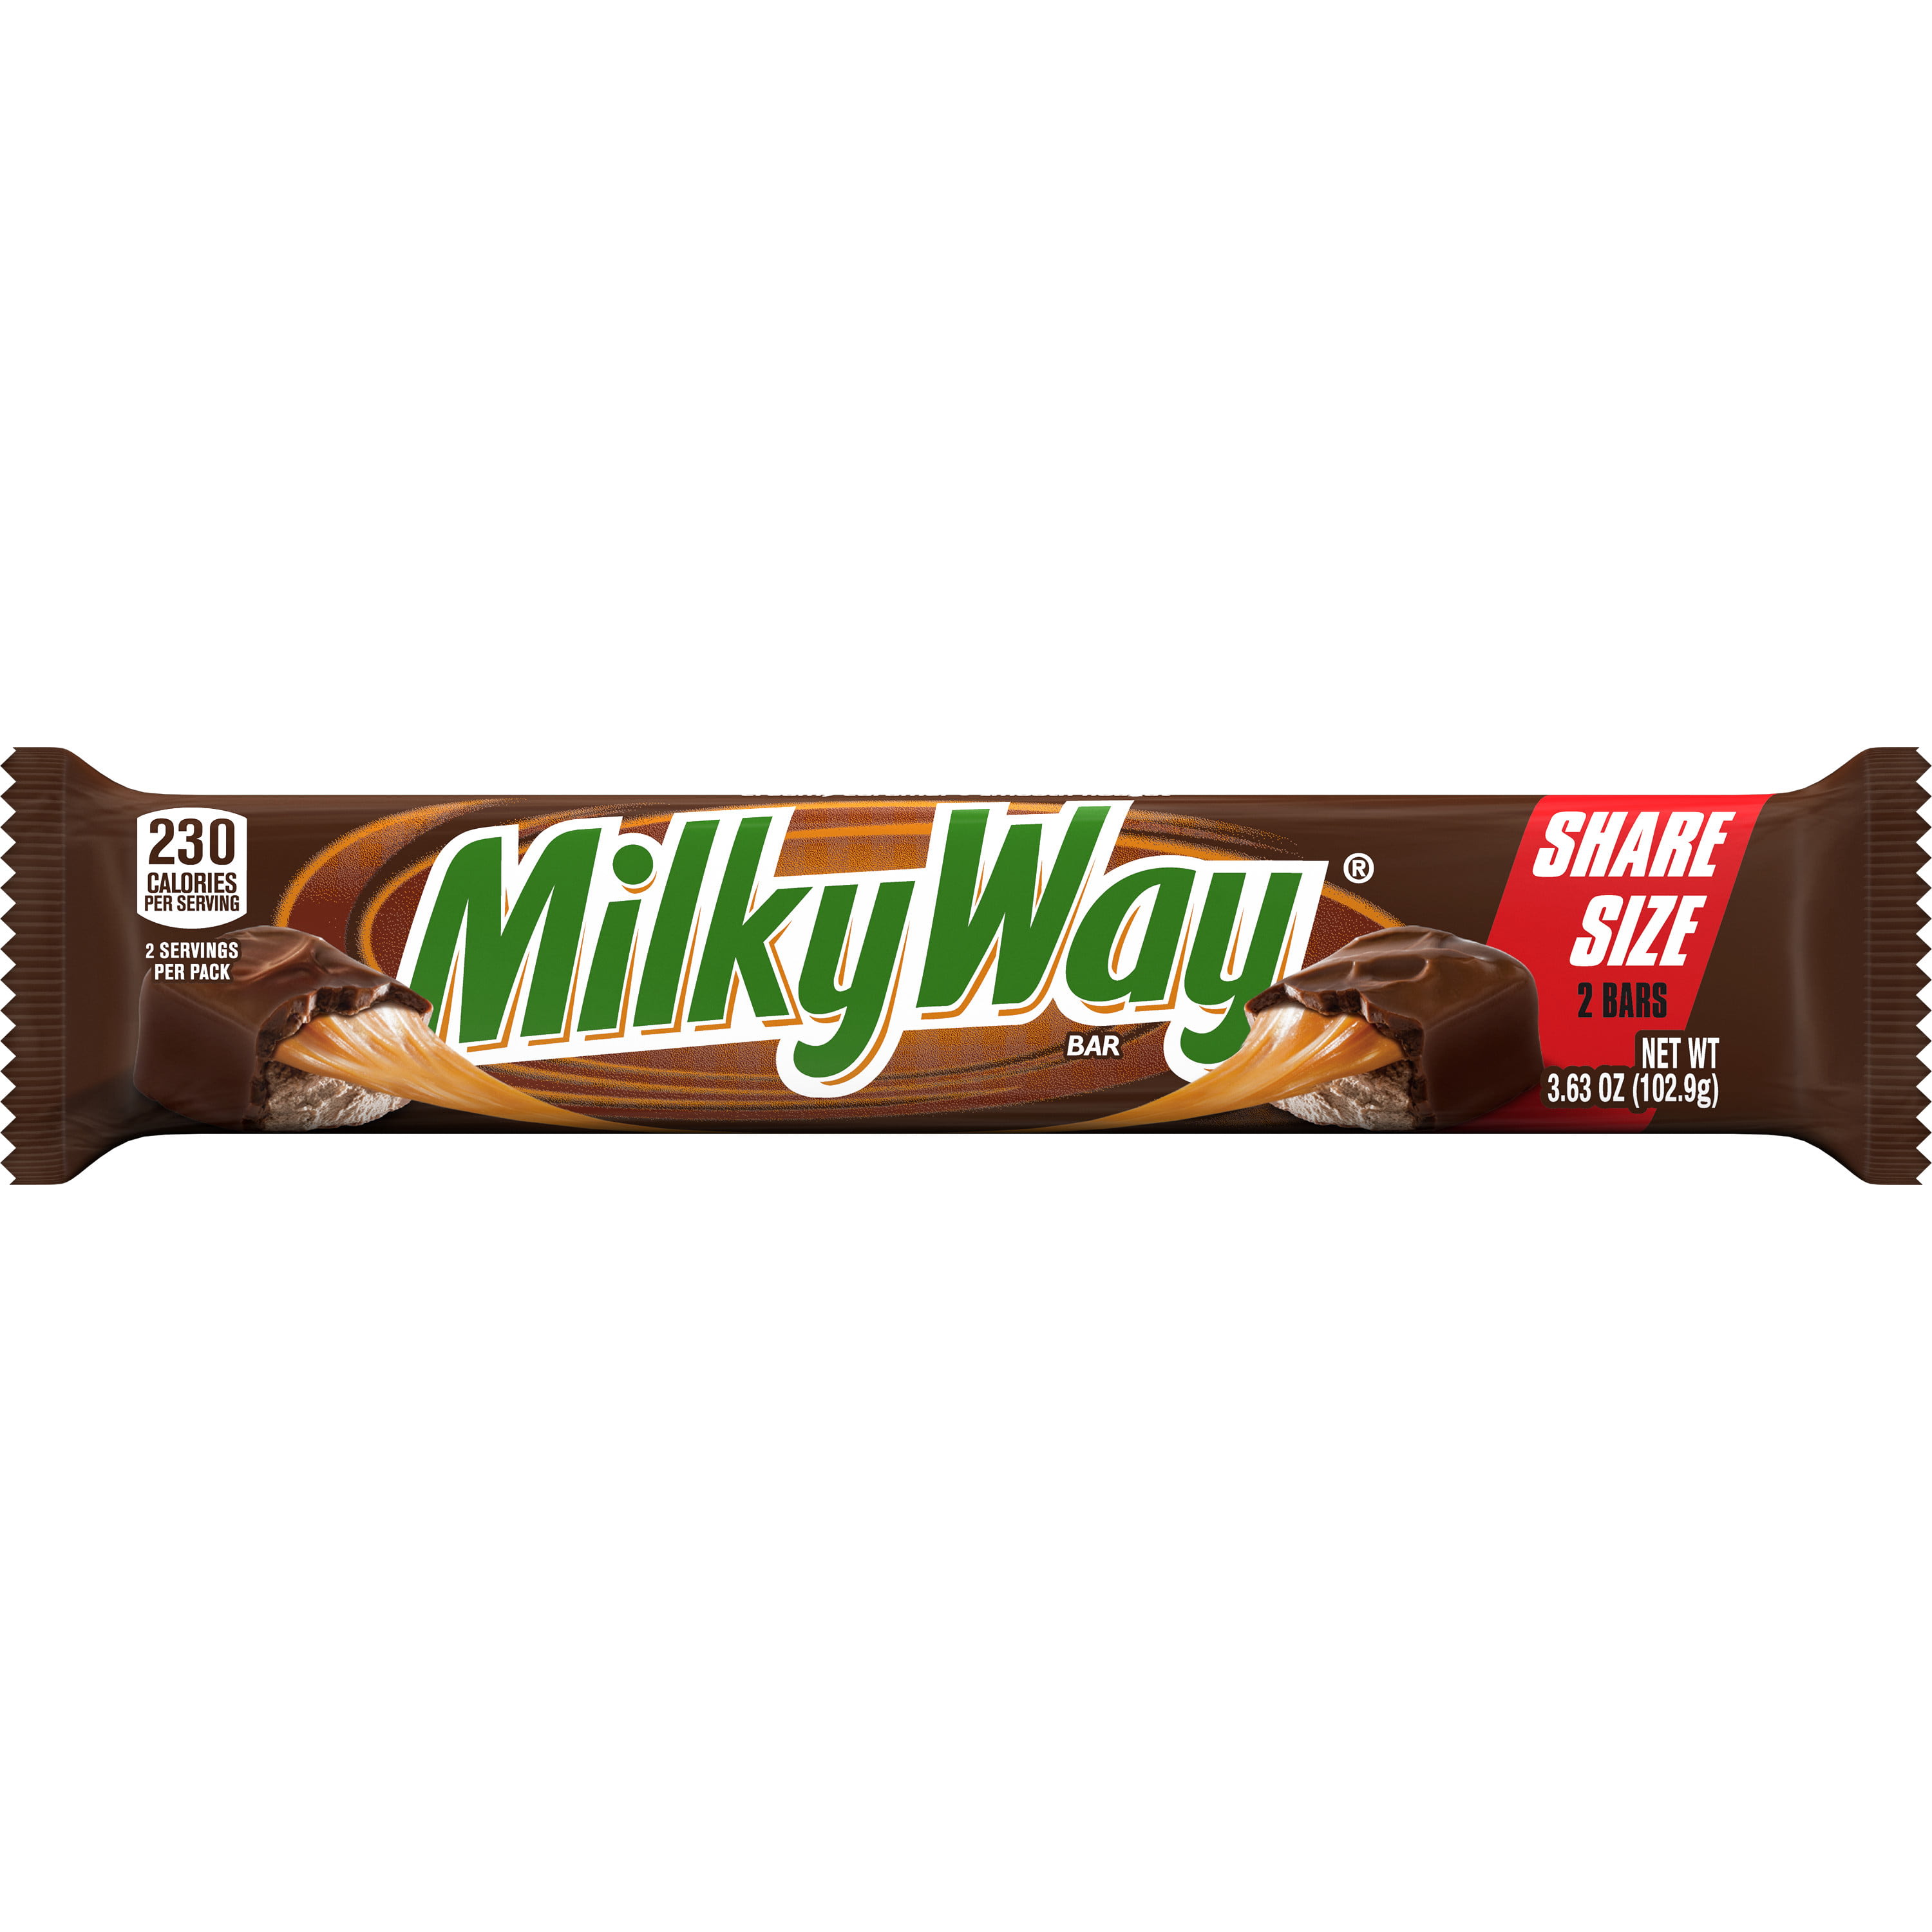 M&M'S Peanut Milk Chocolate Candy - Share Size